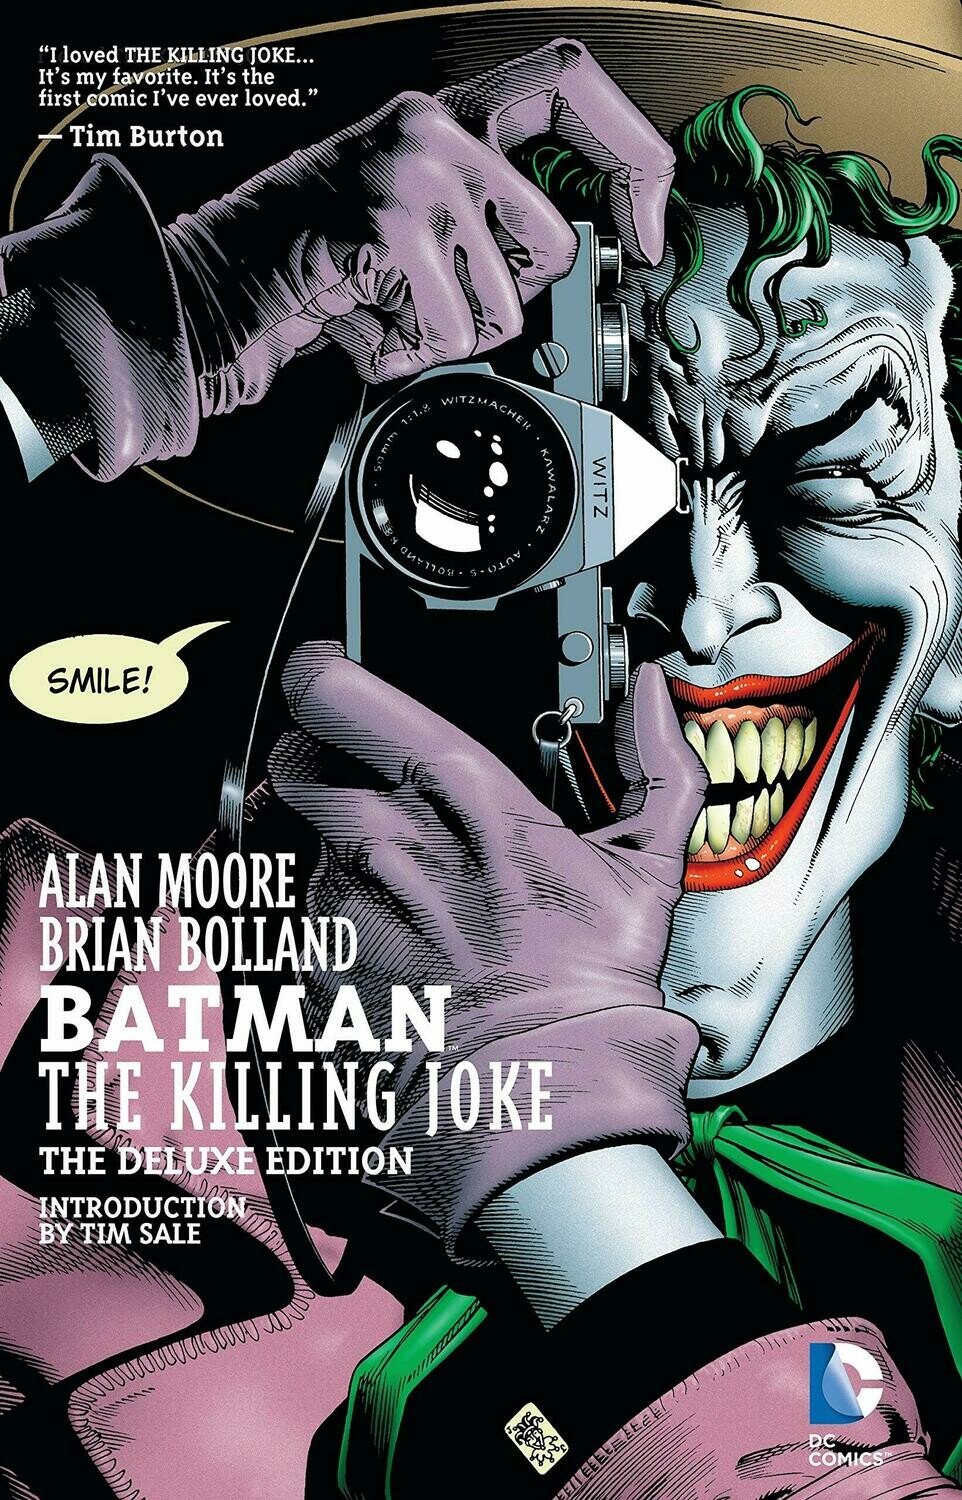 Alan Moore in Brian Bolland: The Killing Joke